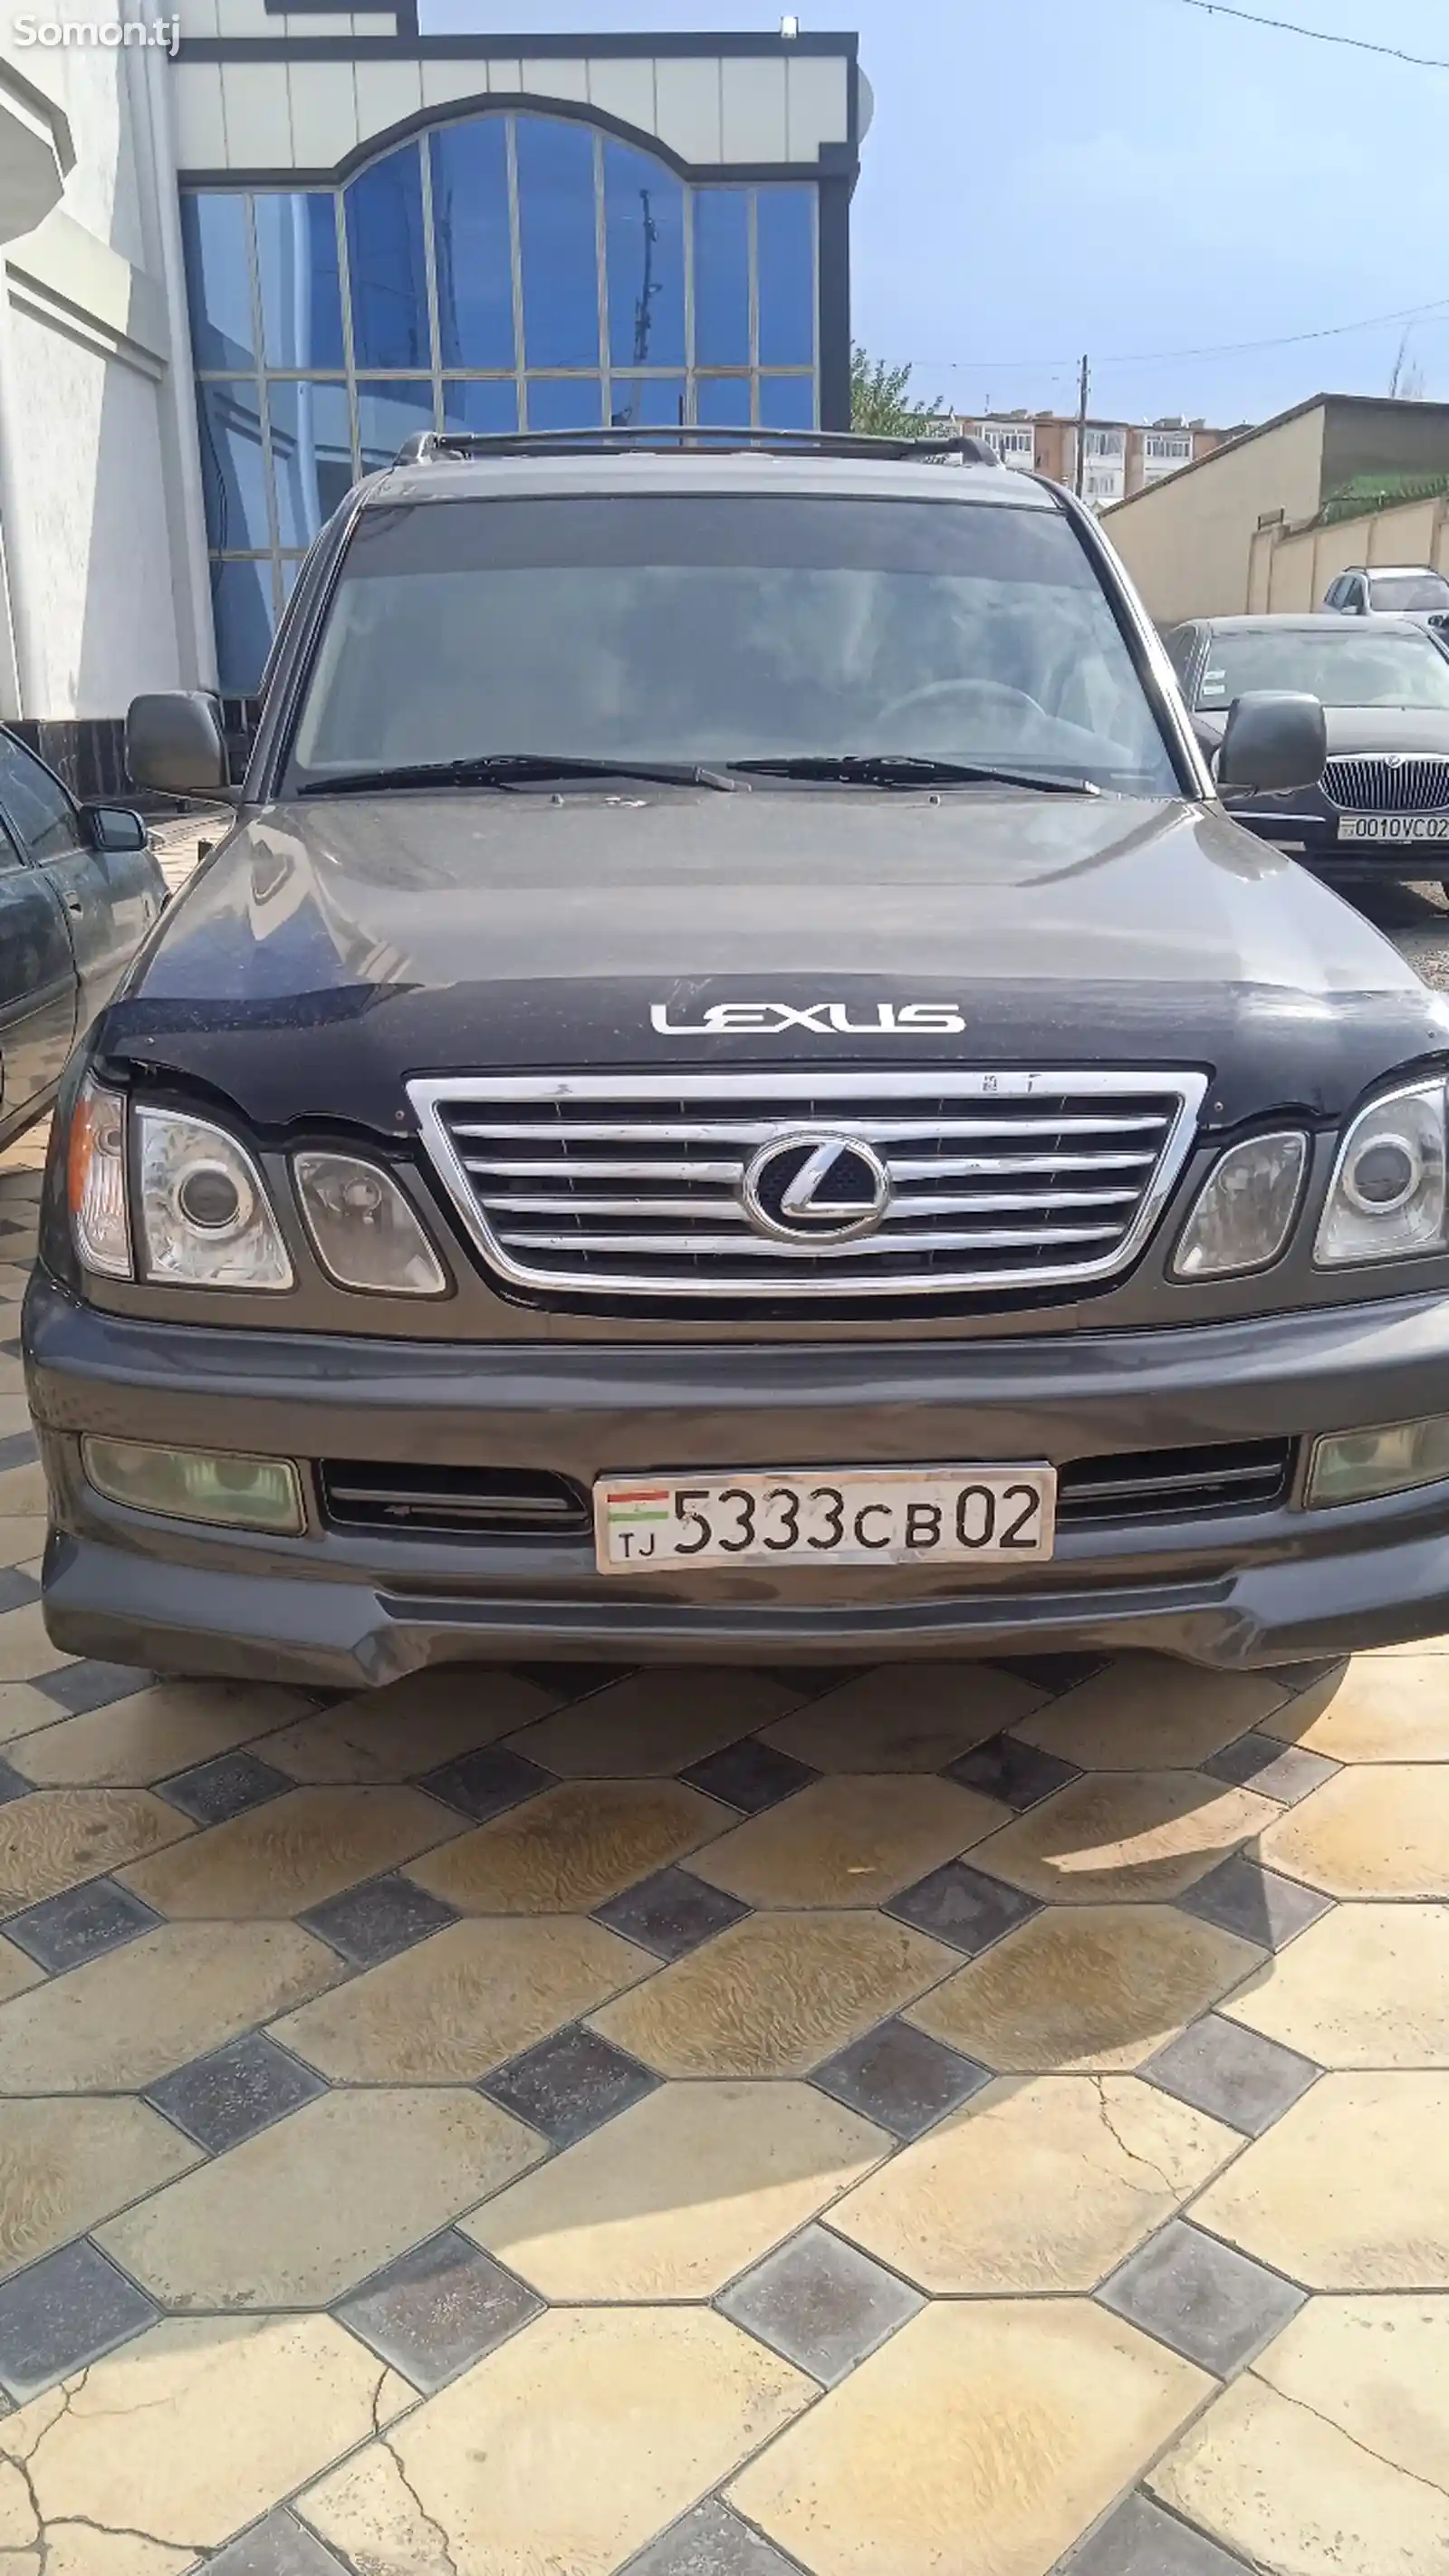 Lexus LX series, 2000-2